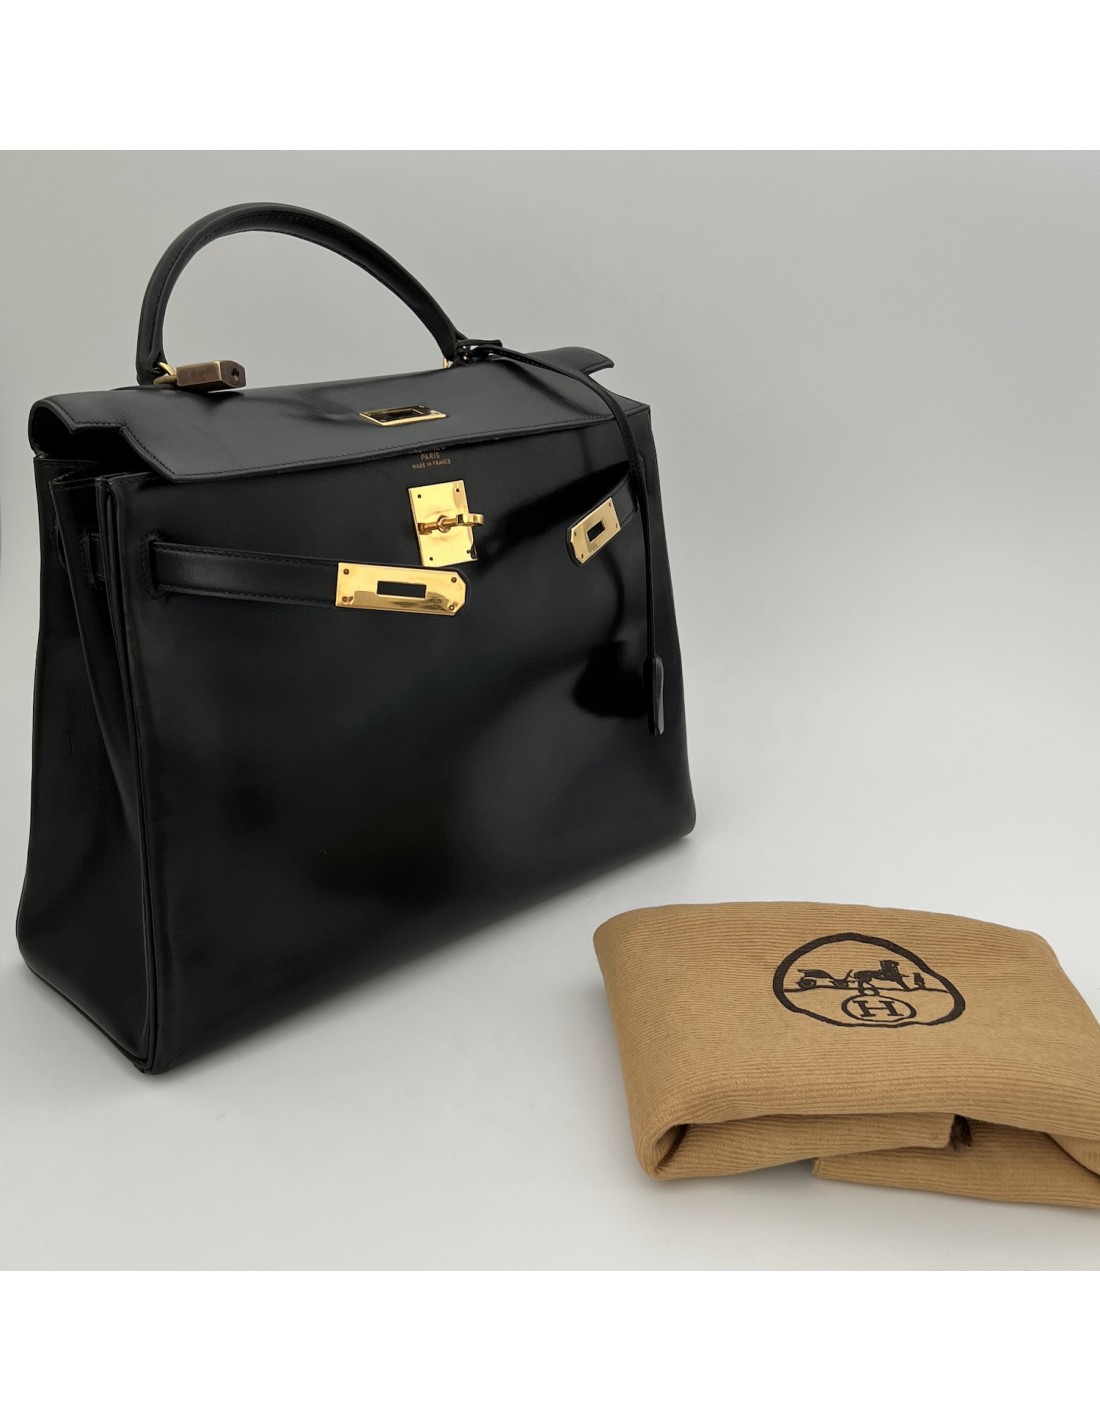 Heritage Vintage: Hermes 28 cm Gold Box Calf Leather Kelly Bag